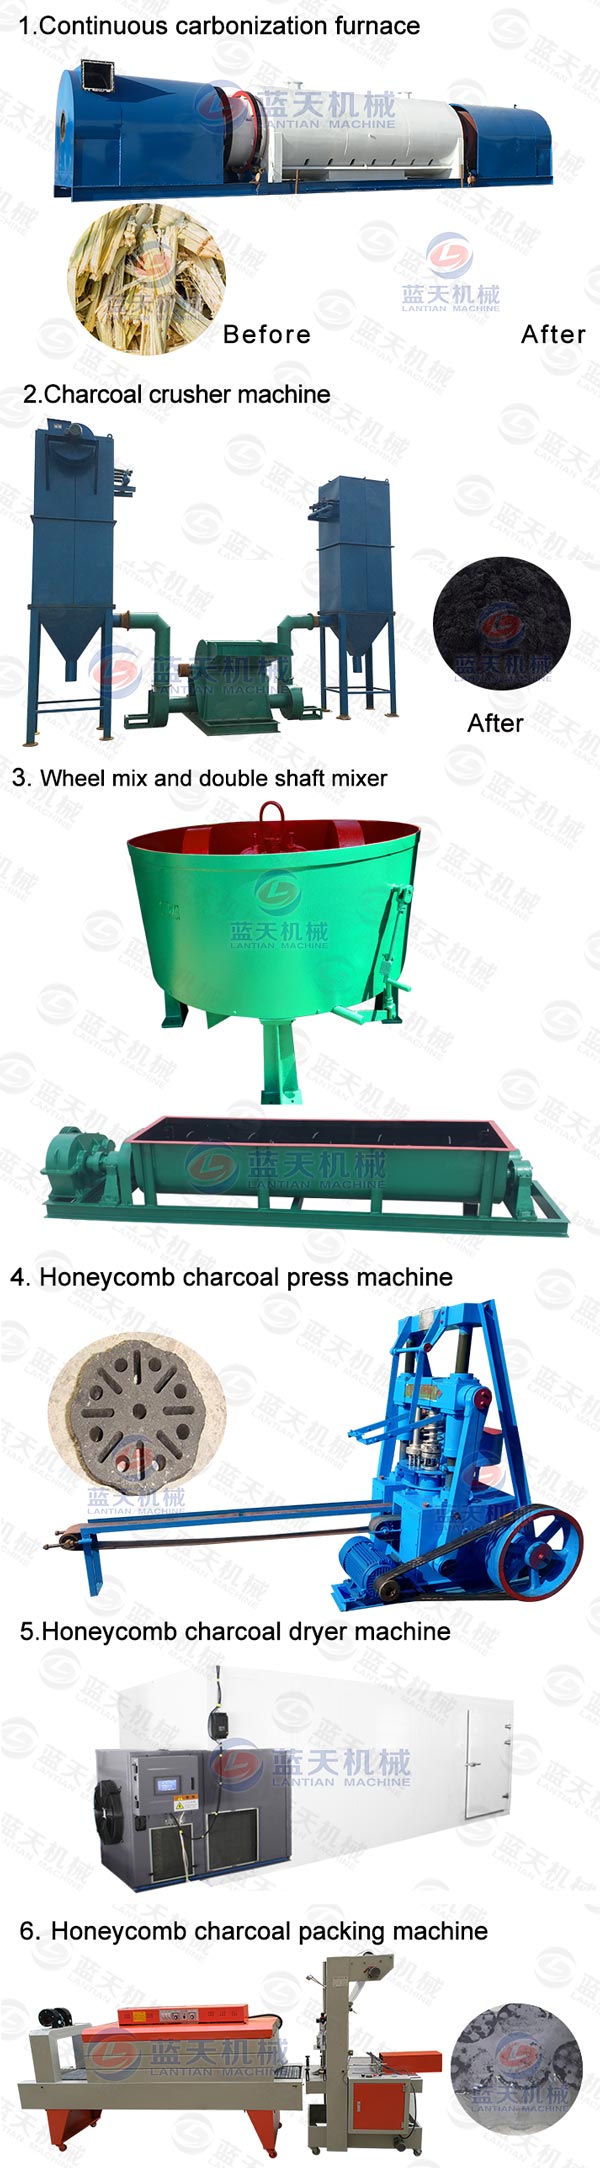 honeycomb charcoal pressing equipment